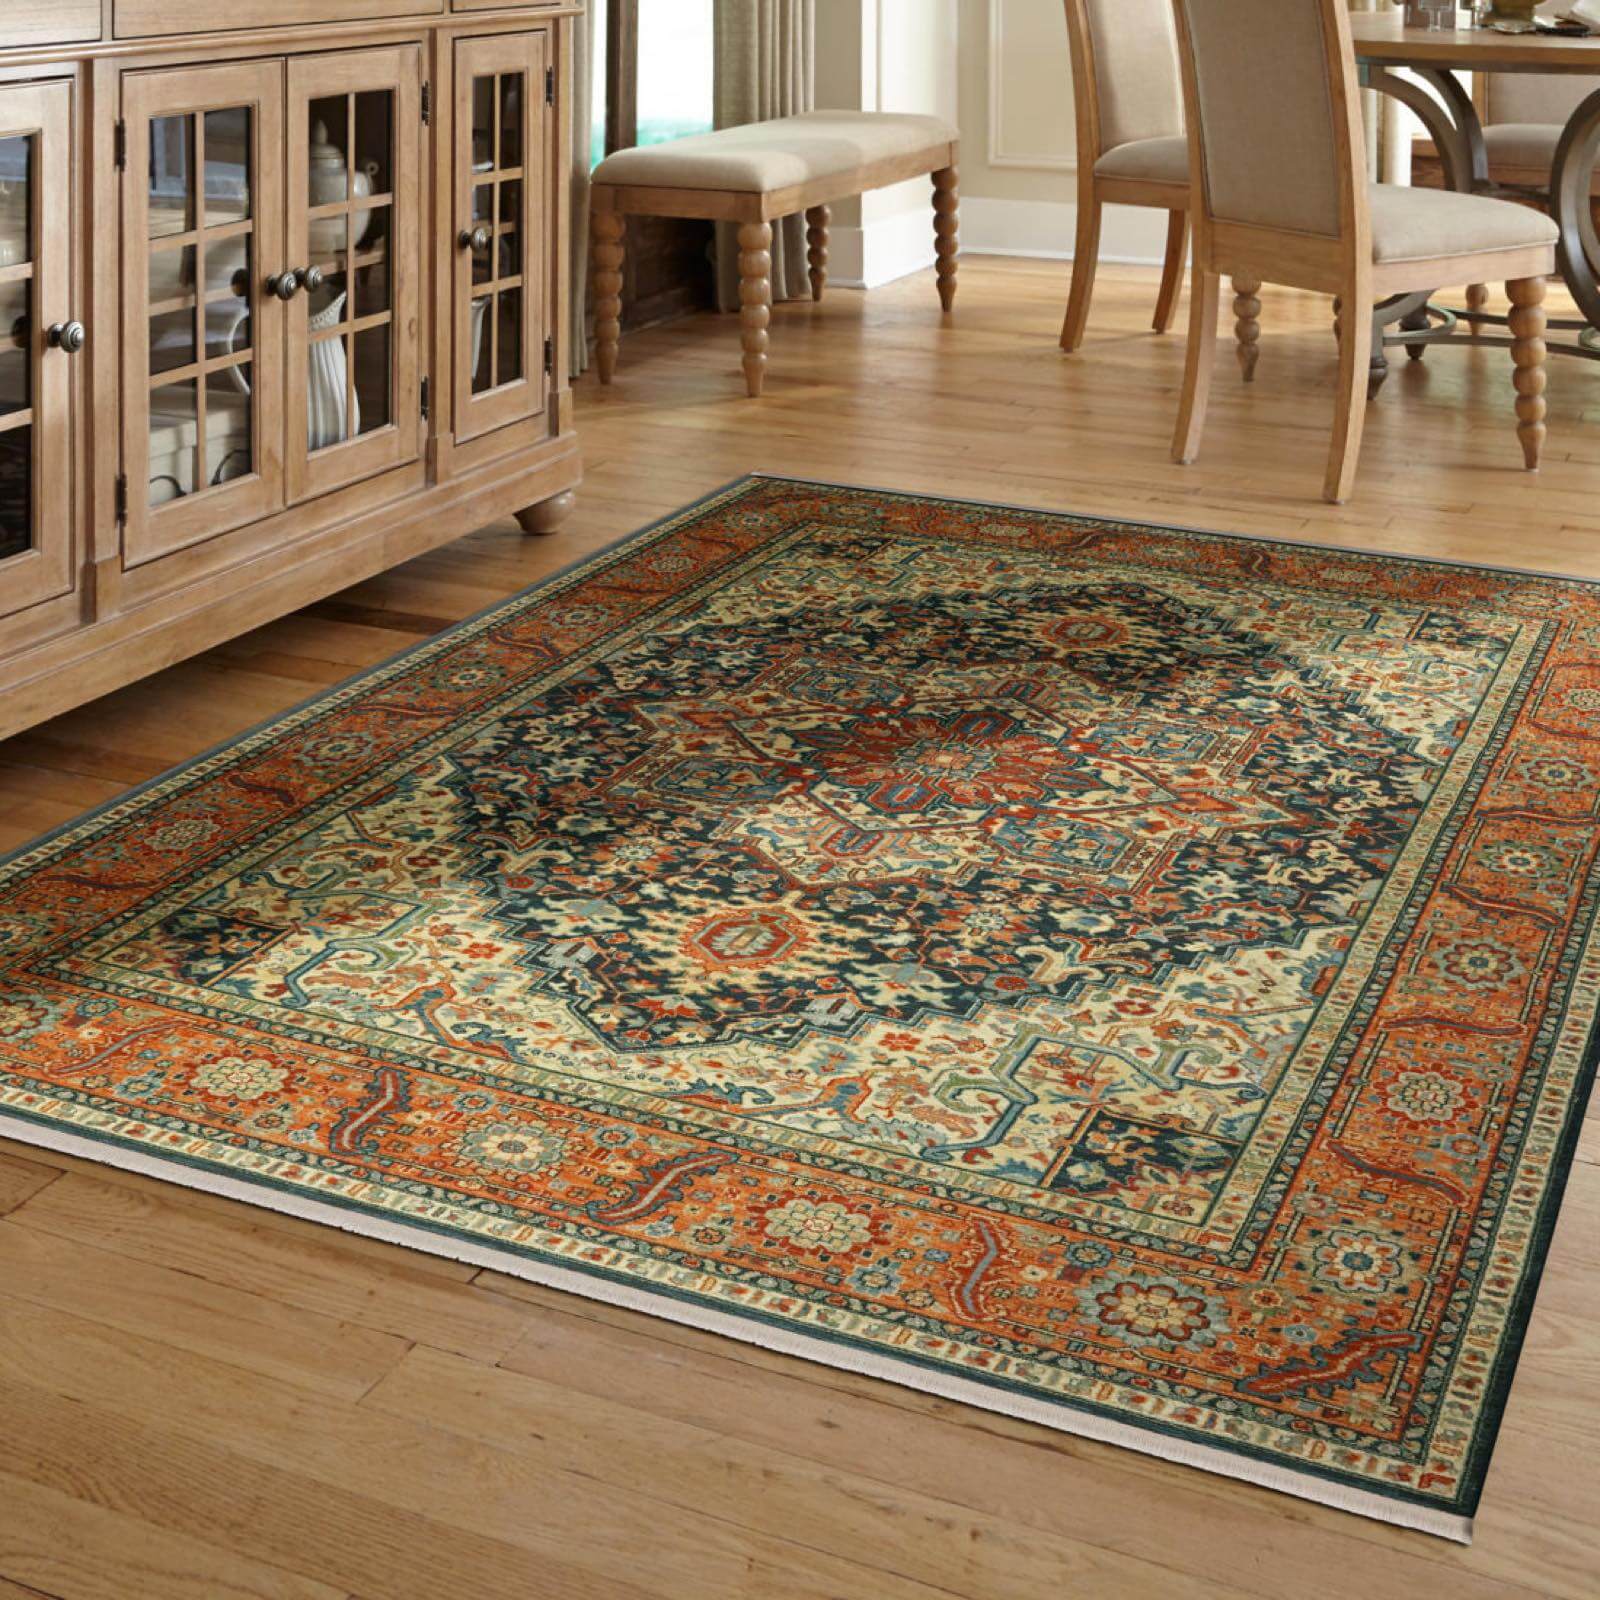 Karastan rug | The Flooring Center